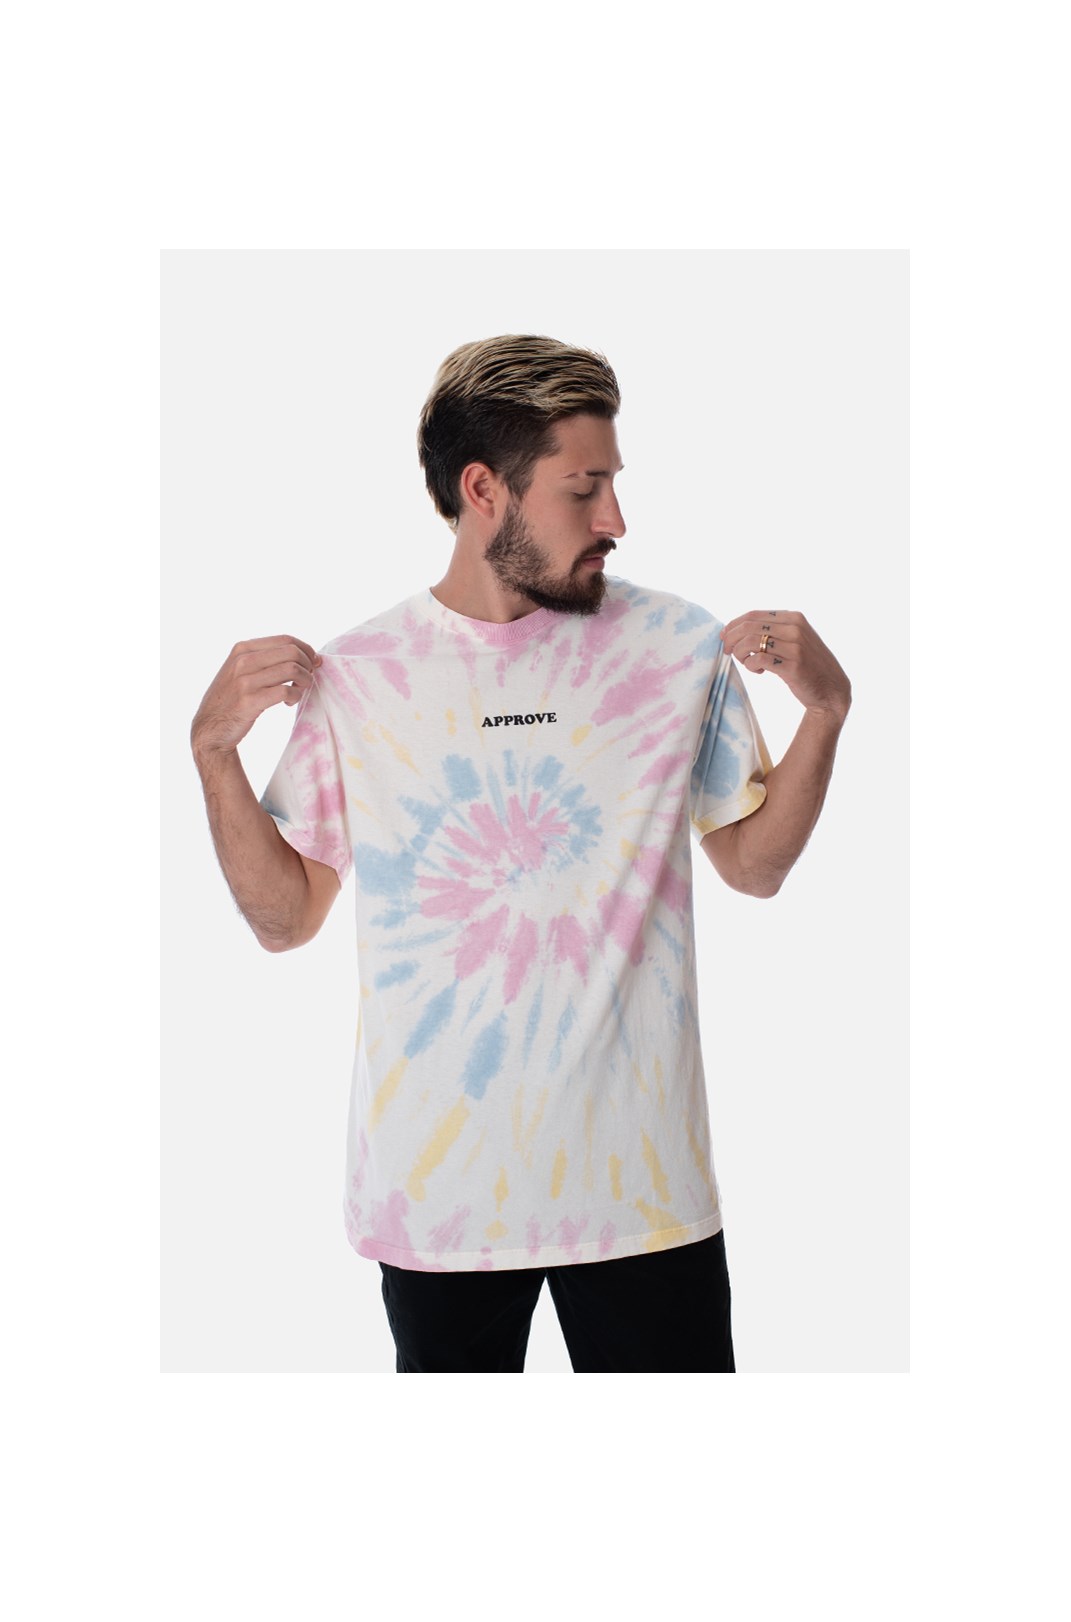 Camiseta Regular Approve Tie Dye Esponjada Colorida